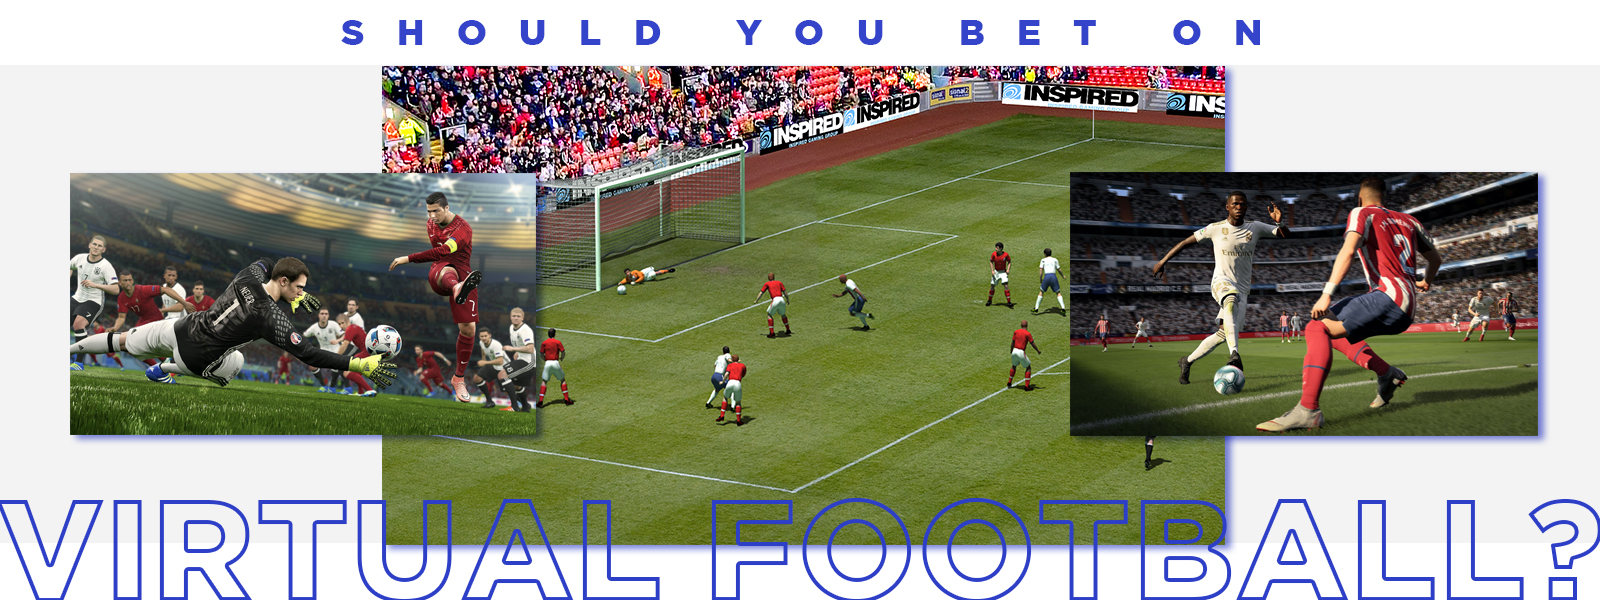 Should You Bet On Virtual Football?